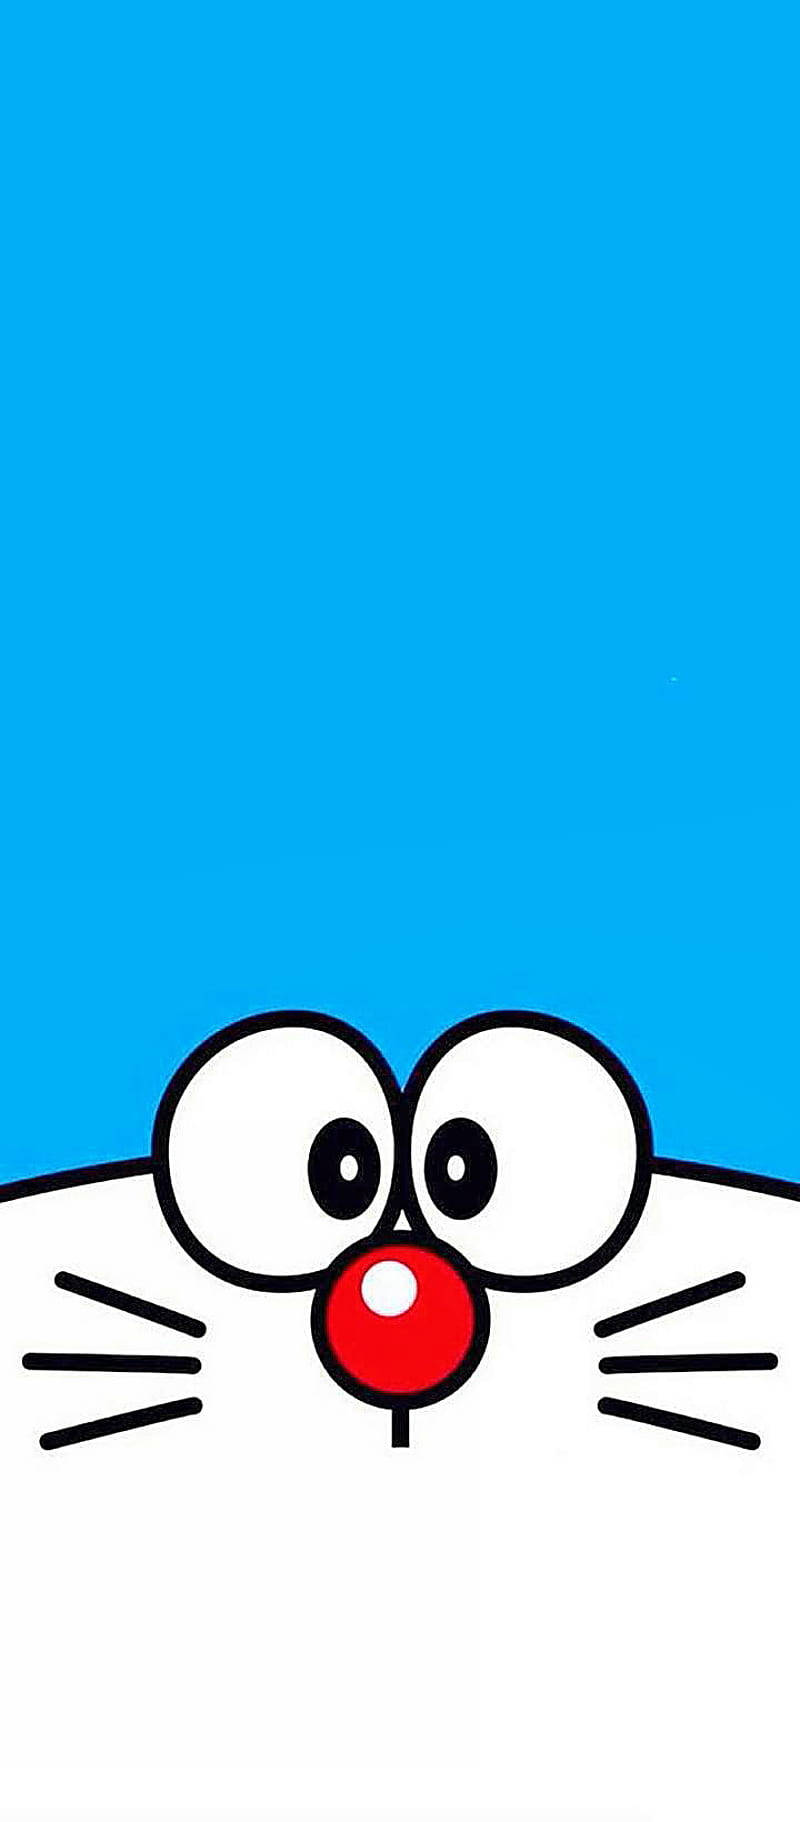 Top 999+ Doraemon Iphone Wallpaper Full HD, 4K✅Free to Use